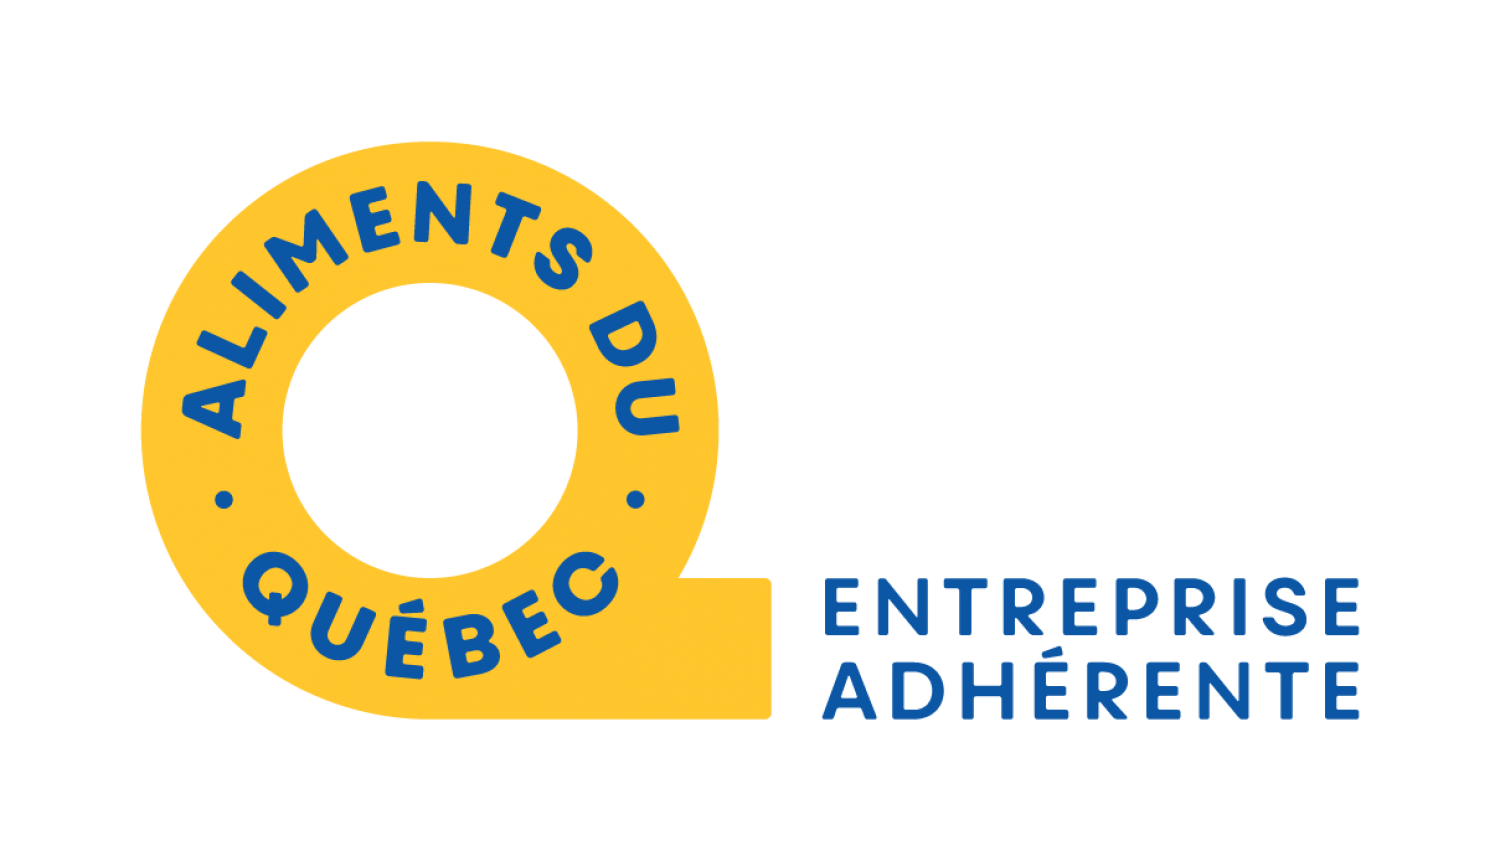 AlimentsDuQuebec_Logo_EntrepriseAdherente_RGB